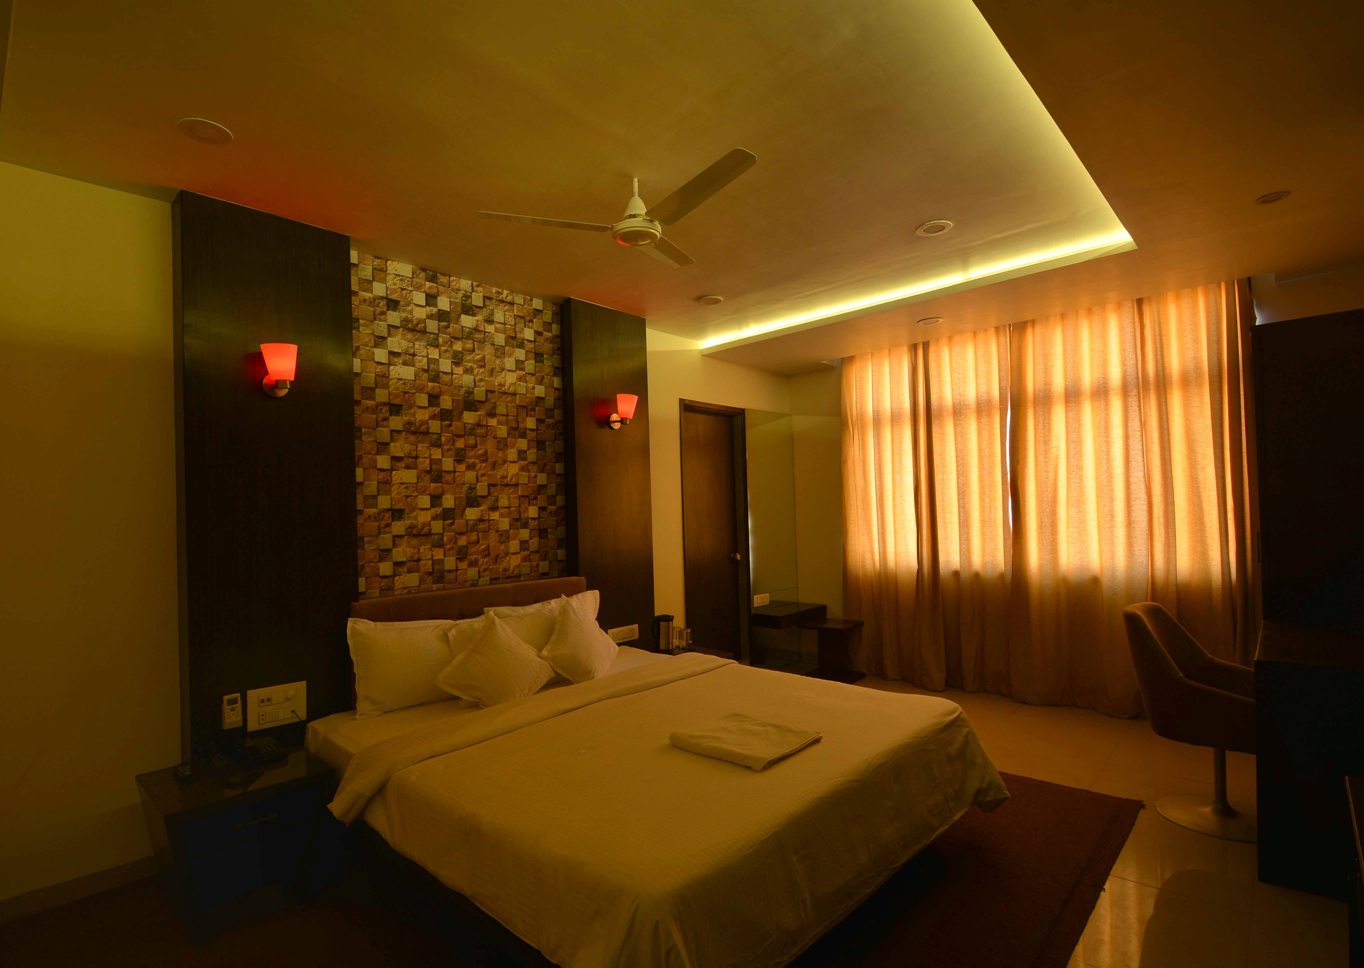 The Sensation Hotel Indore